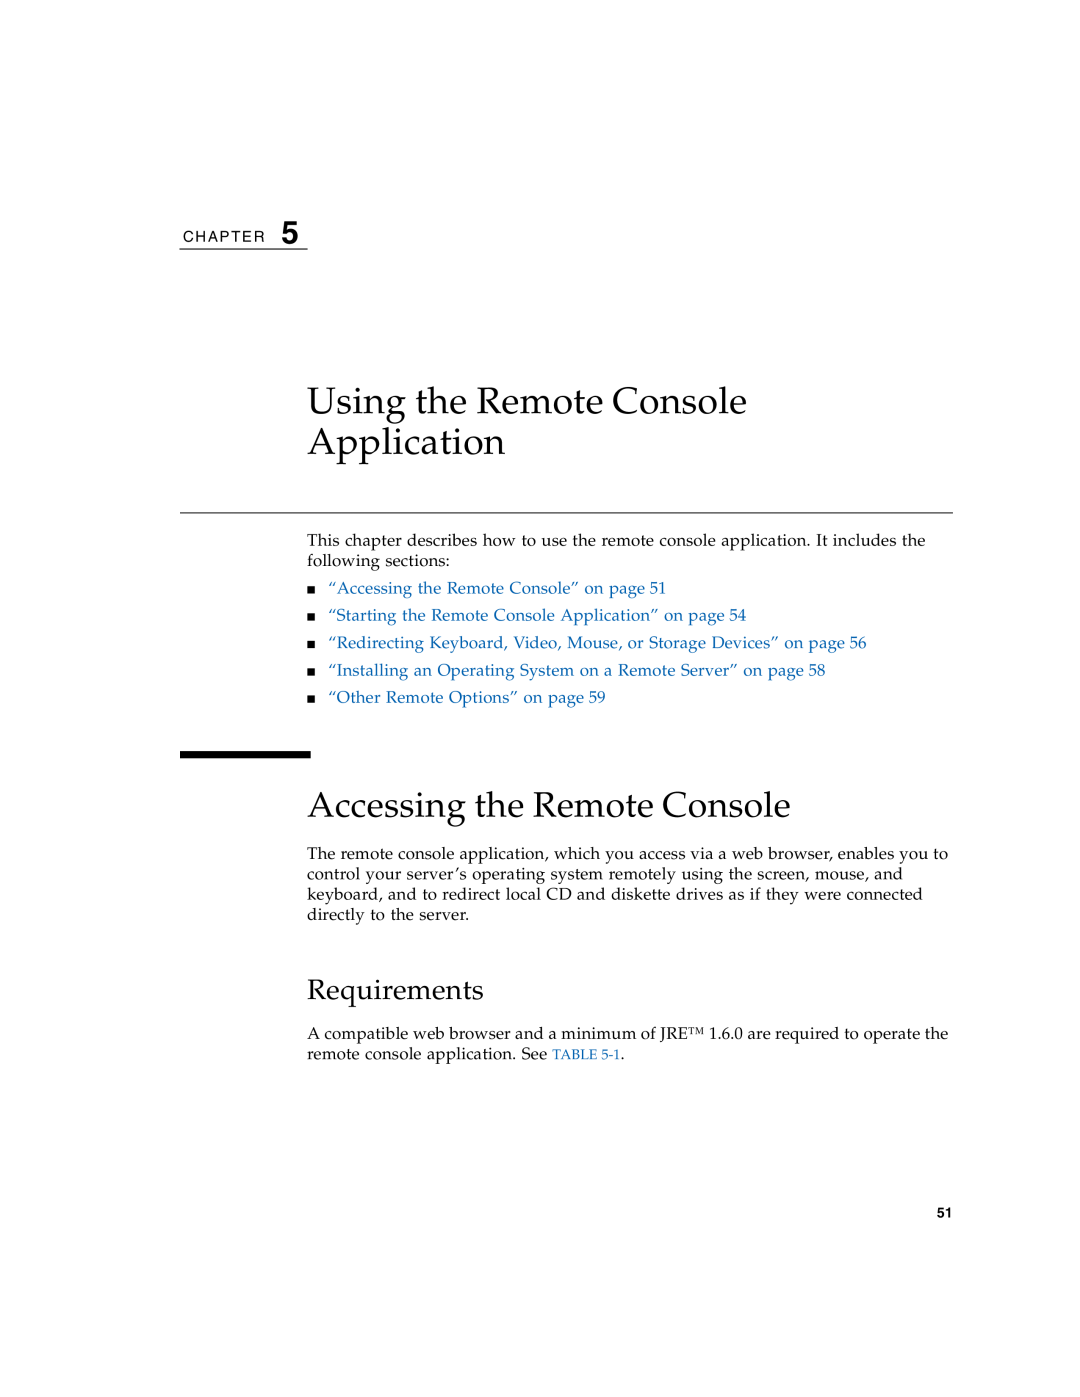 Sun Microsystems X4150 manual Using the Remote Console Application, Accessing the Remote Console, Requirements 